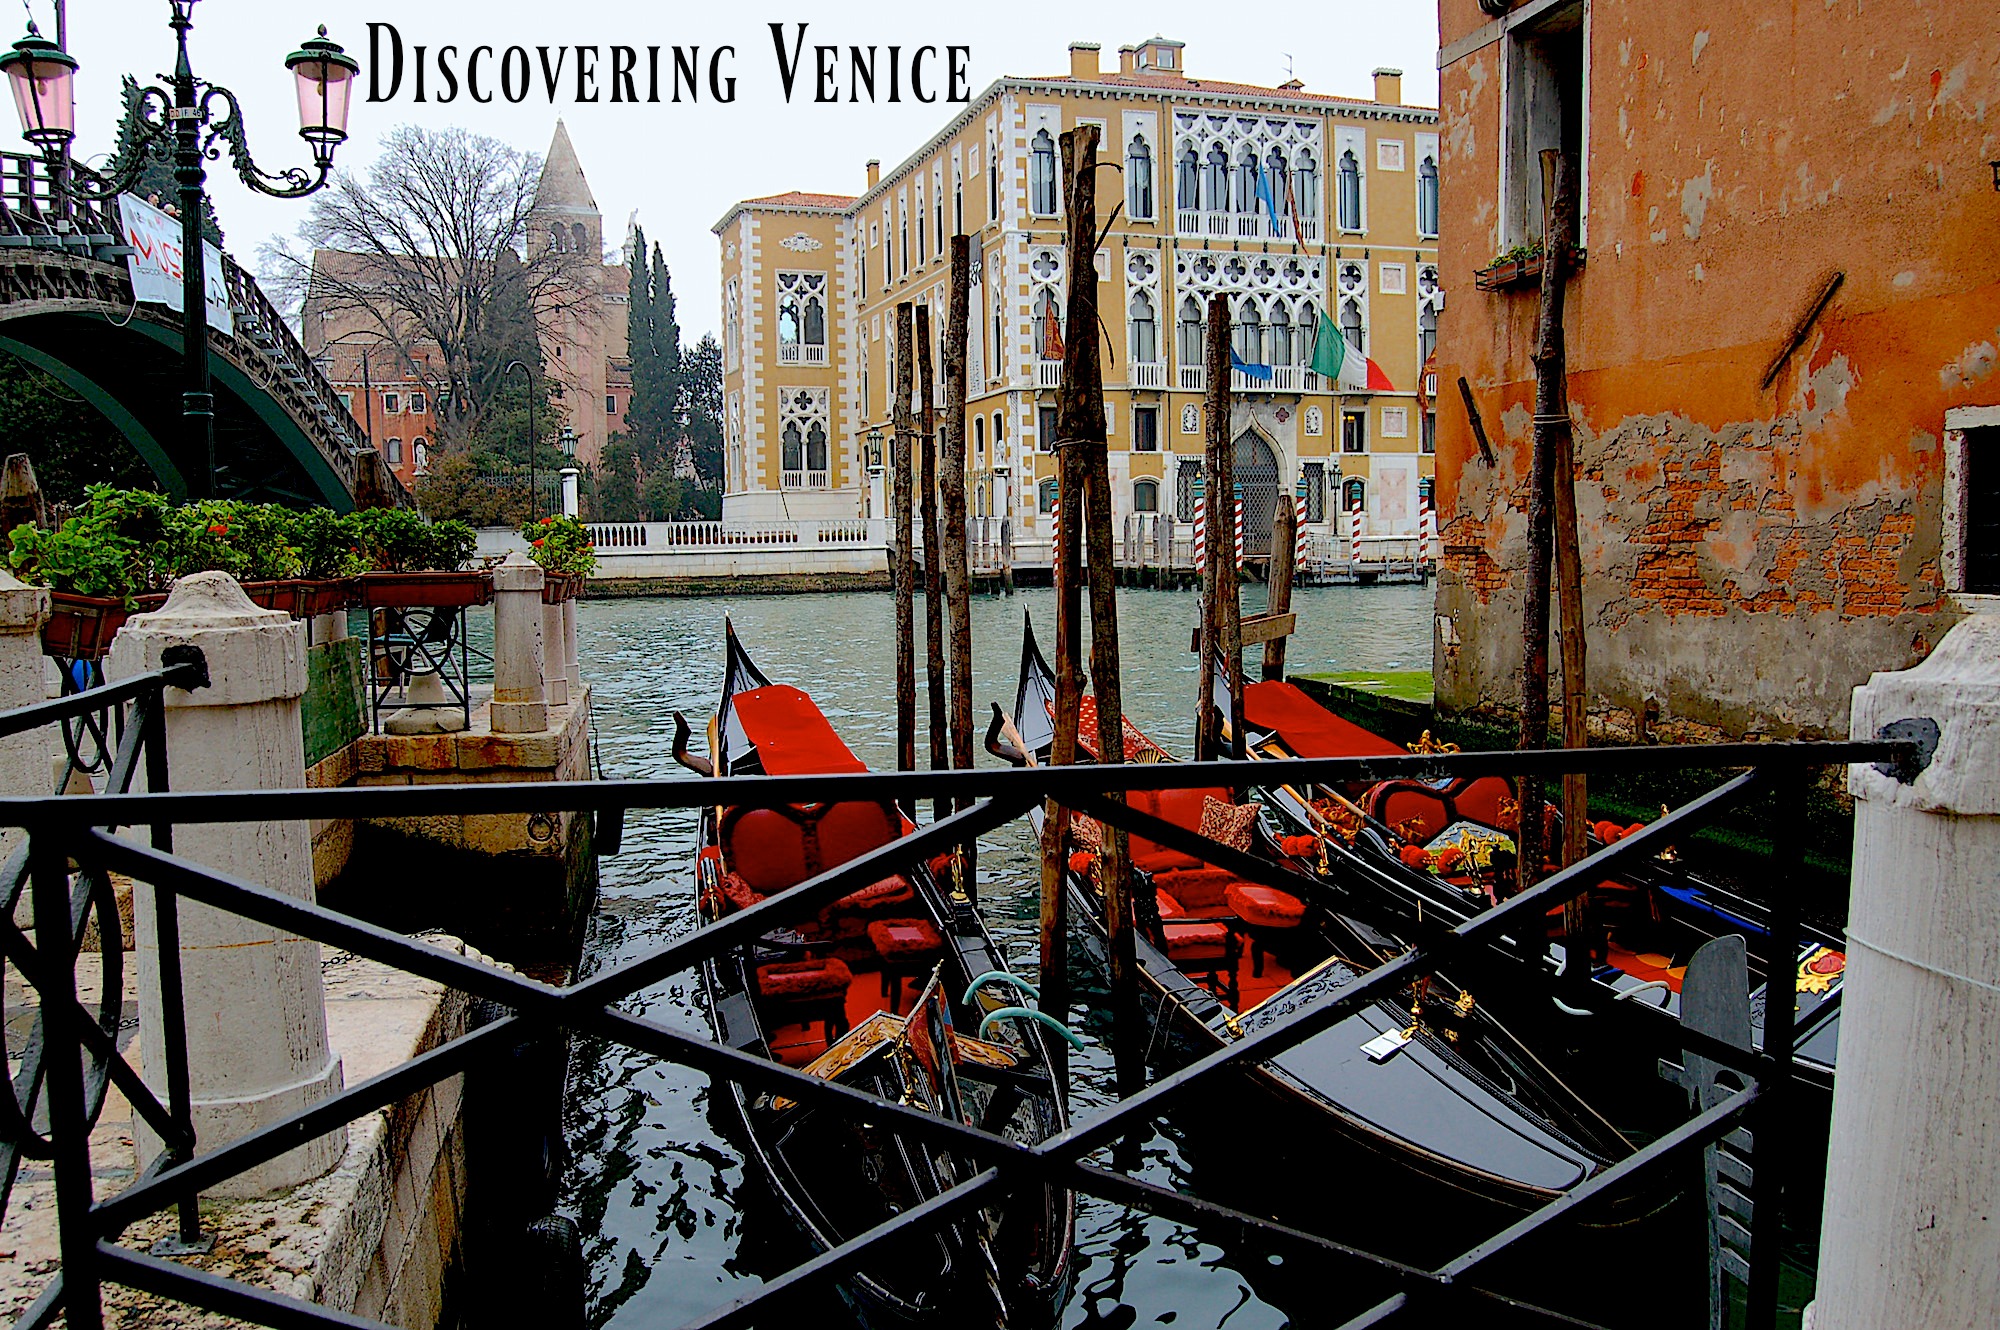 Take in the beautiful gondolas throughout Venice